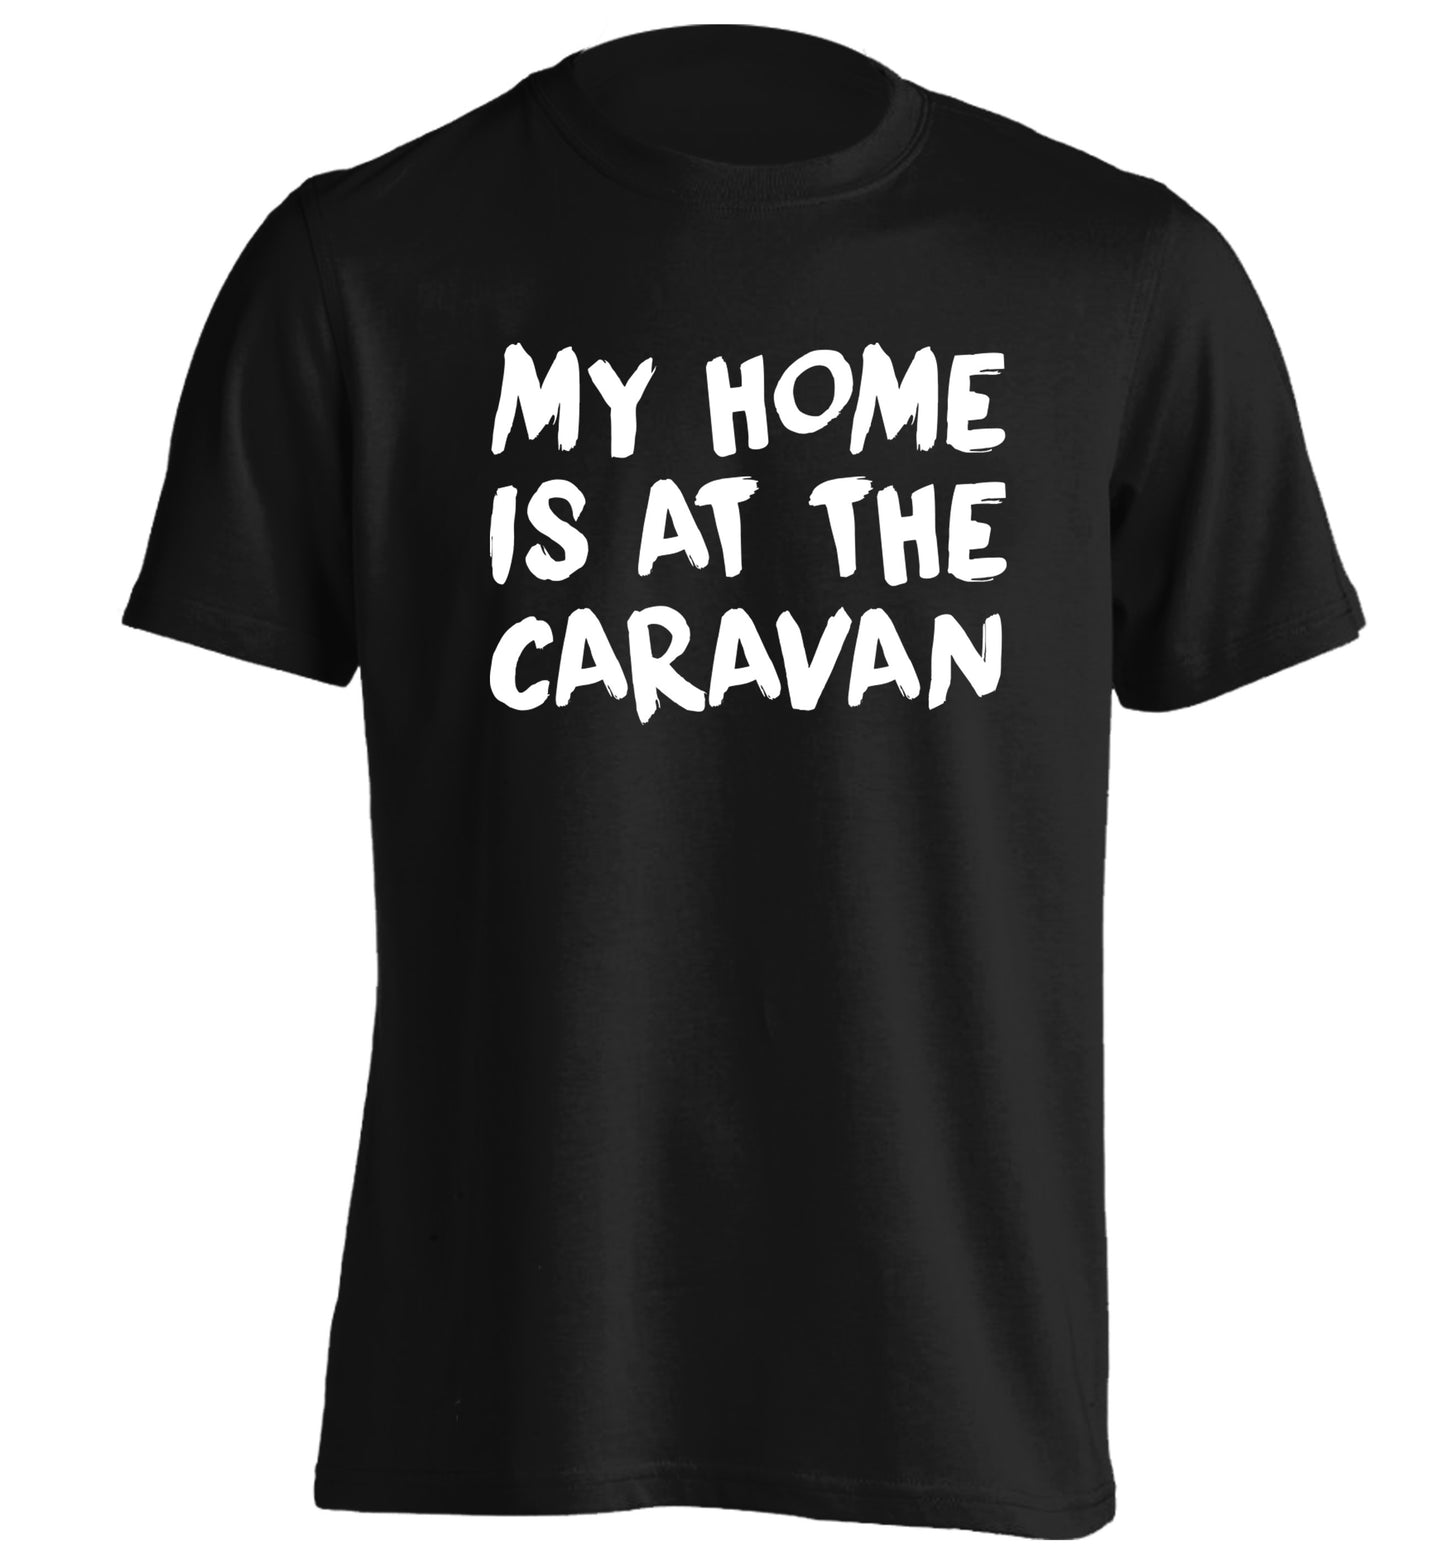 My home is at the caravan adults unisex black Tshirt 2XL